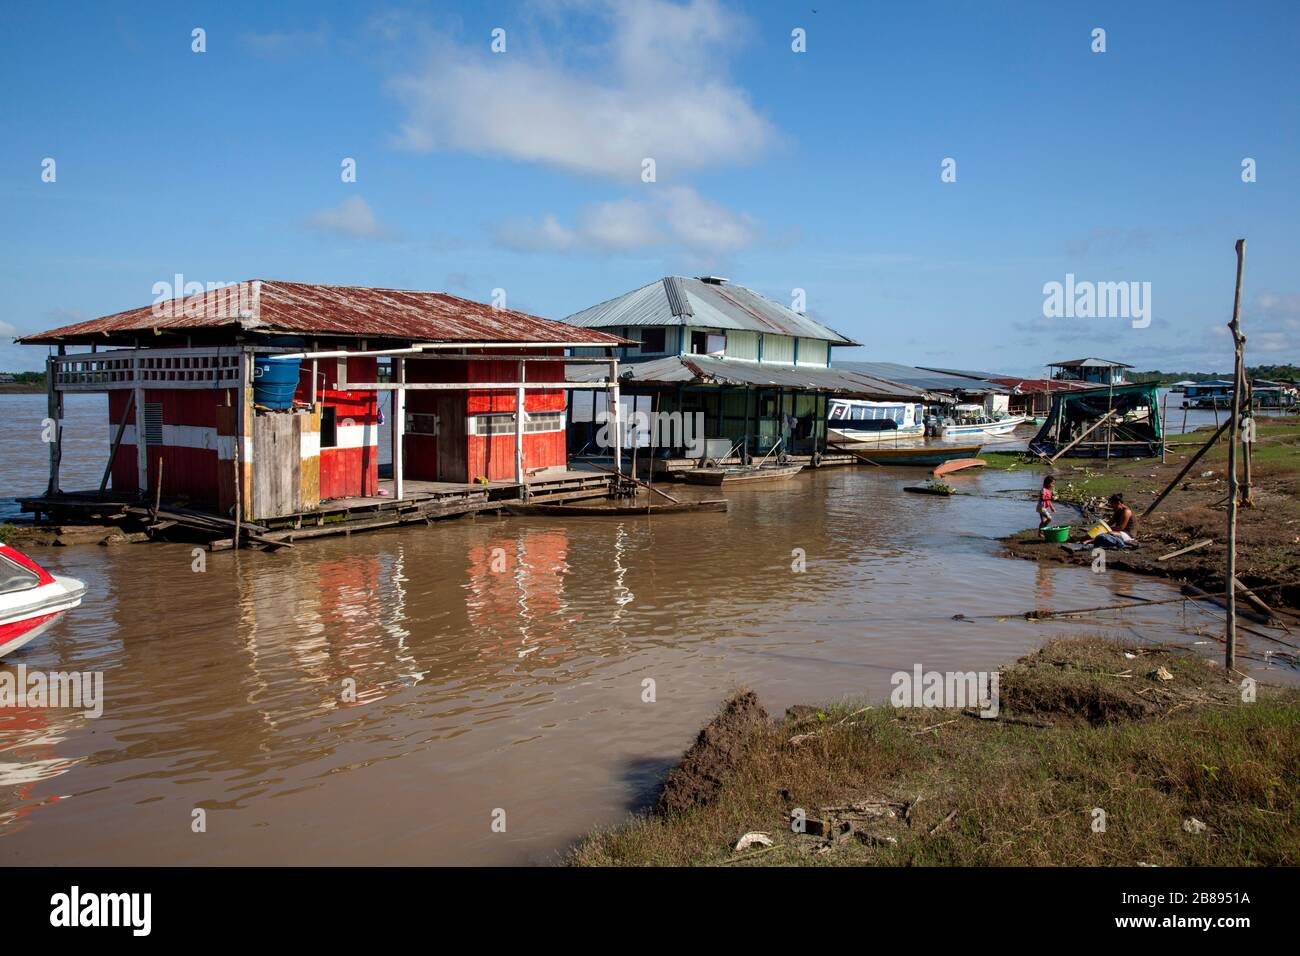 Schwimmendes Haus, Heim, Hausboot, am Fluss Amazon, Kolumbien, Südamerika  Stockfotografie - Alamy